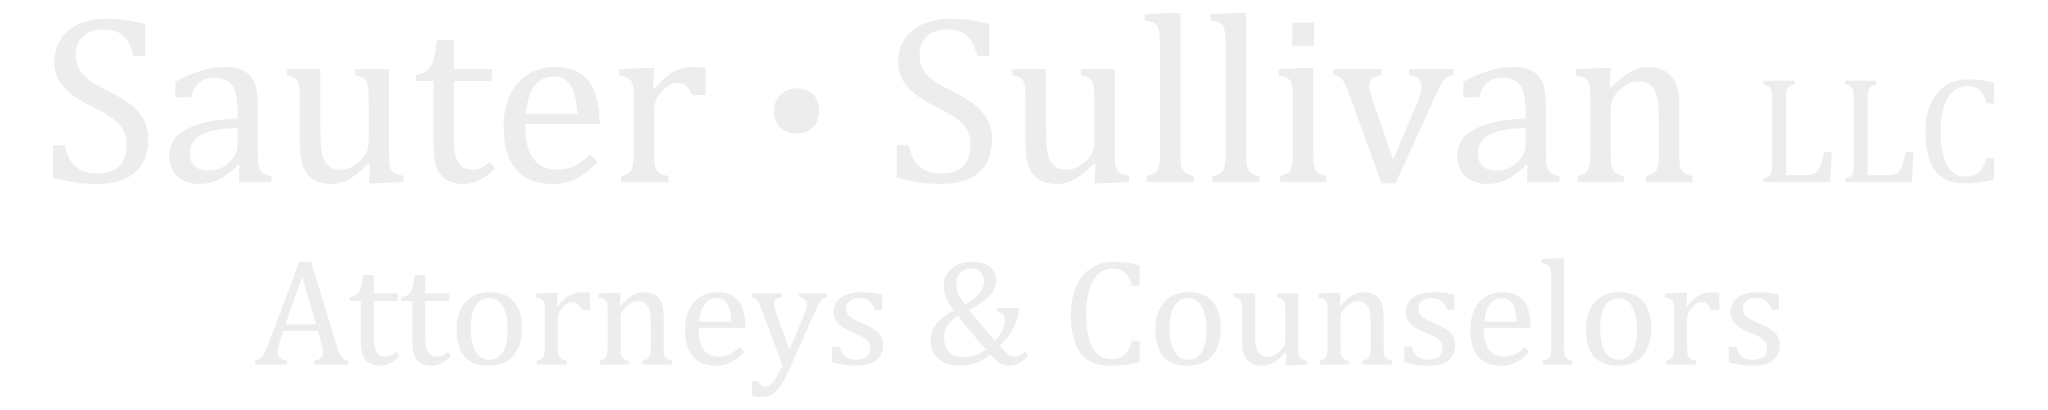 sauter-sullivan-logo-centered-light-gray--transparent